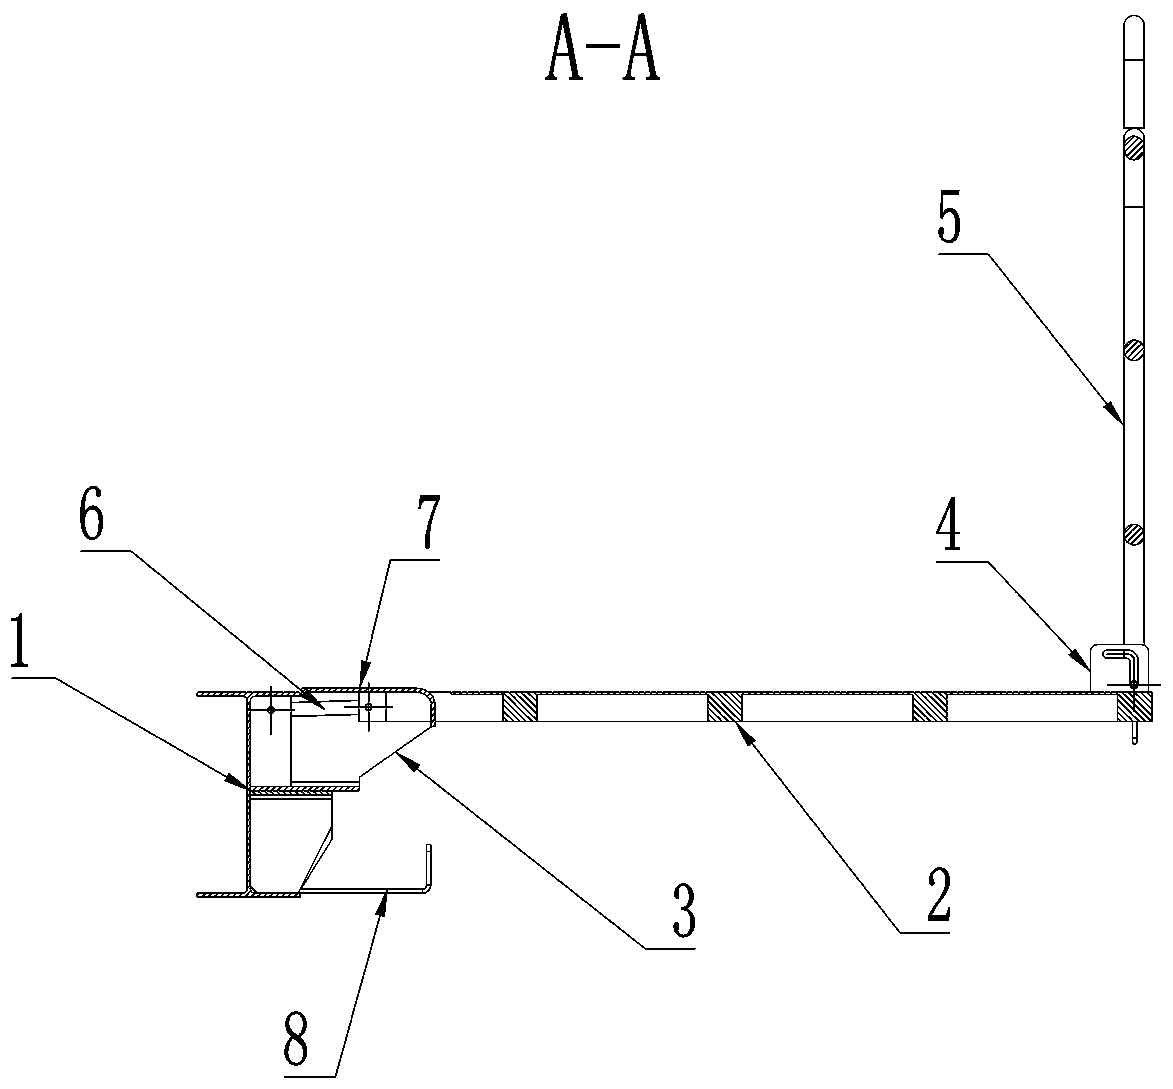 Folding traveling platform mechanism